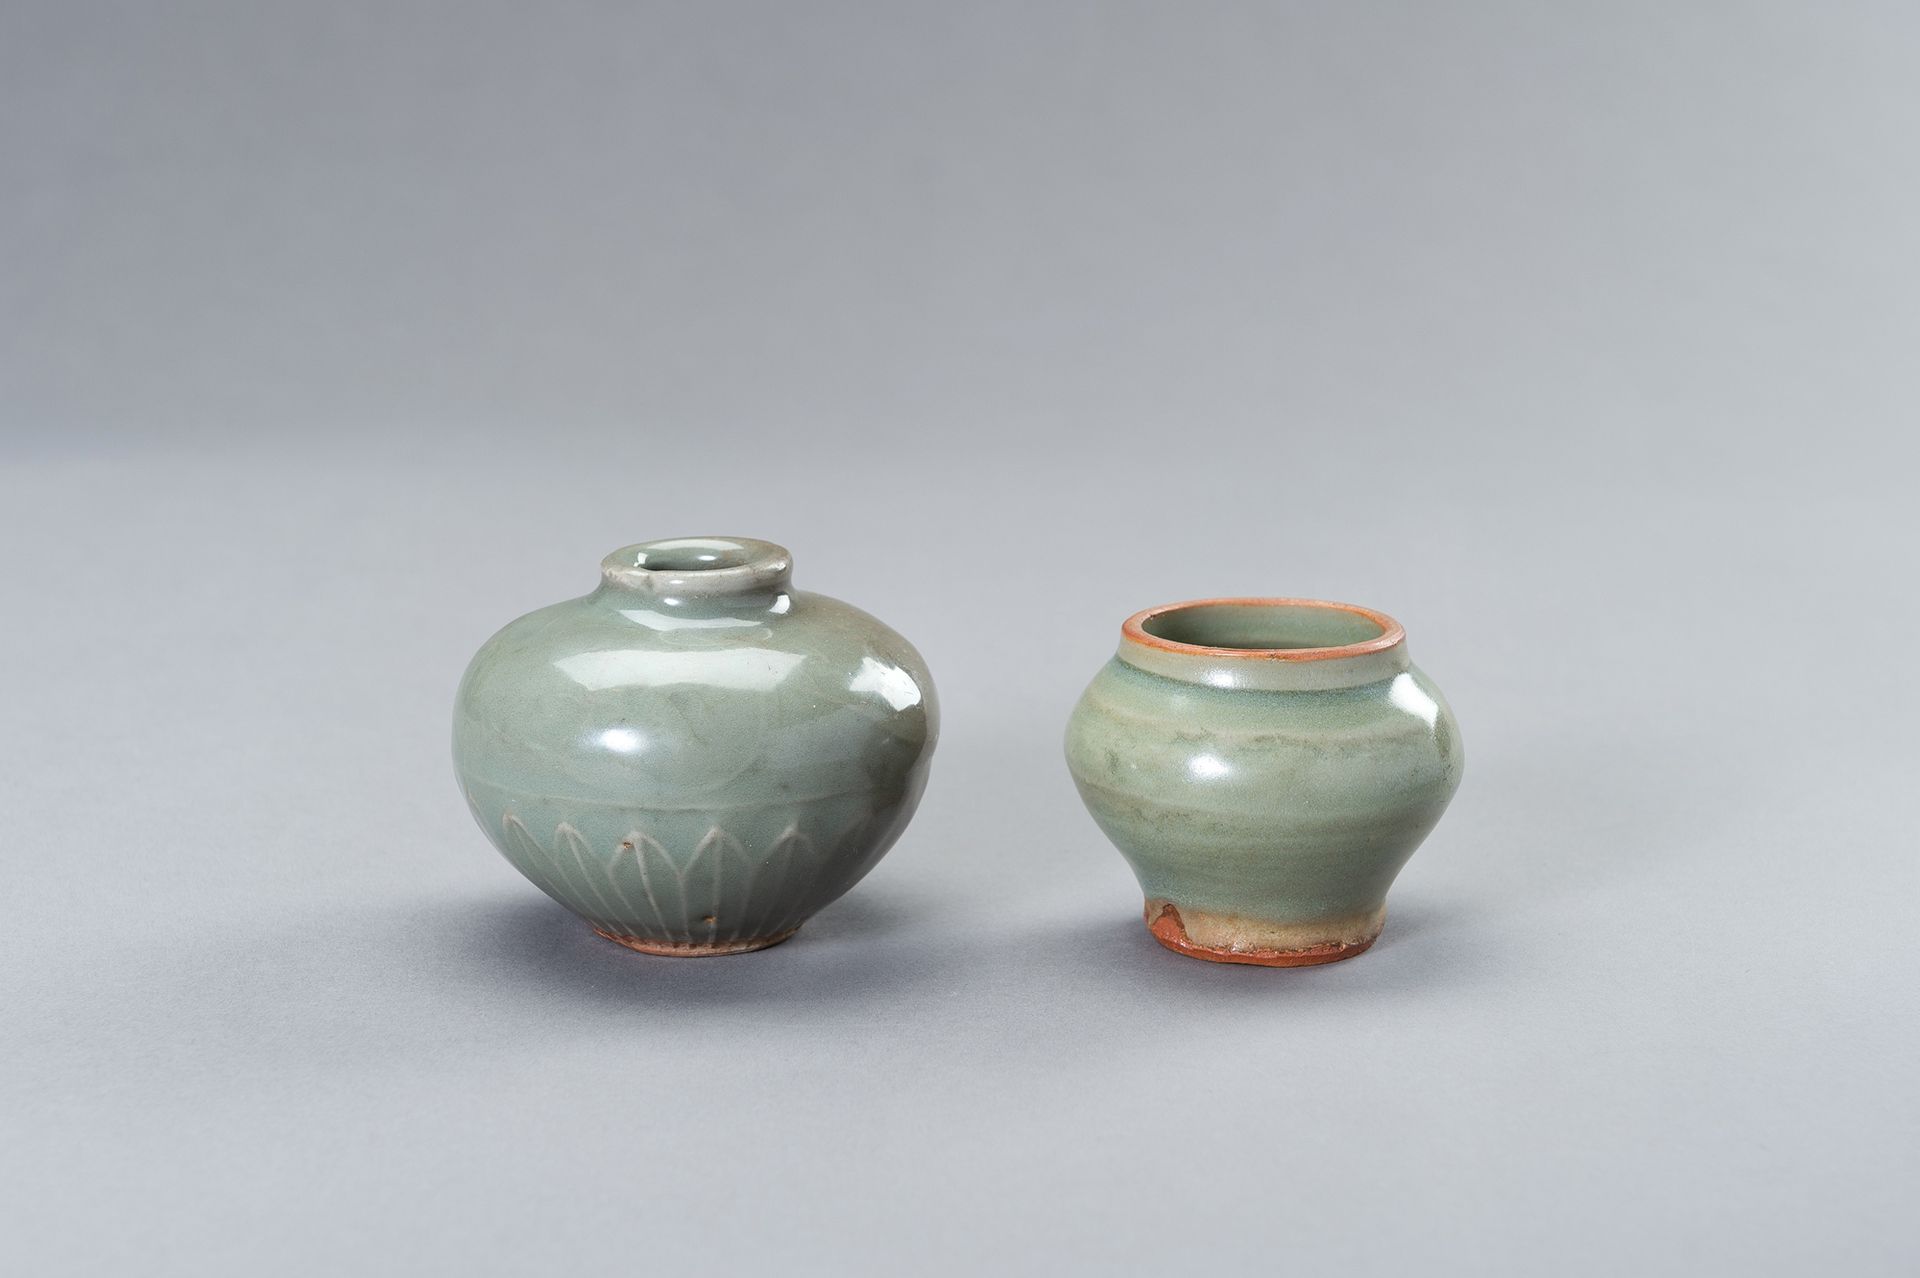 TWO SMALL CELADON GLAZED JARS 两个小型青瓷釉罐
中国，明朝（1368-1644）。一件是柱状，从阶梯状的底到宽直的颈，覆盖着厚厚的&hellip;